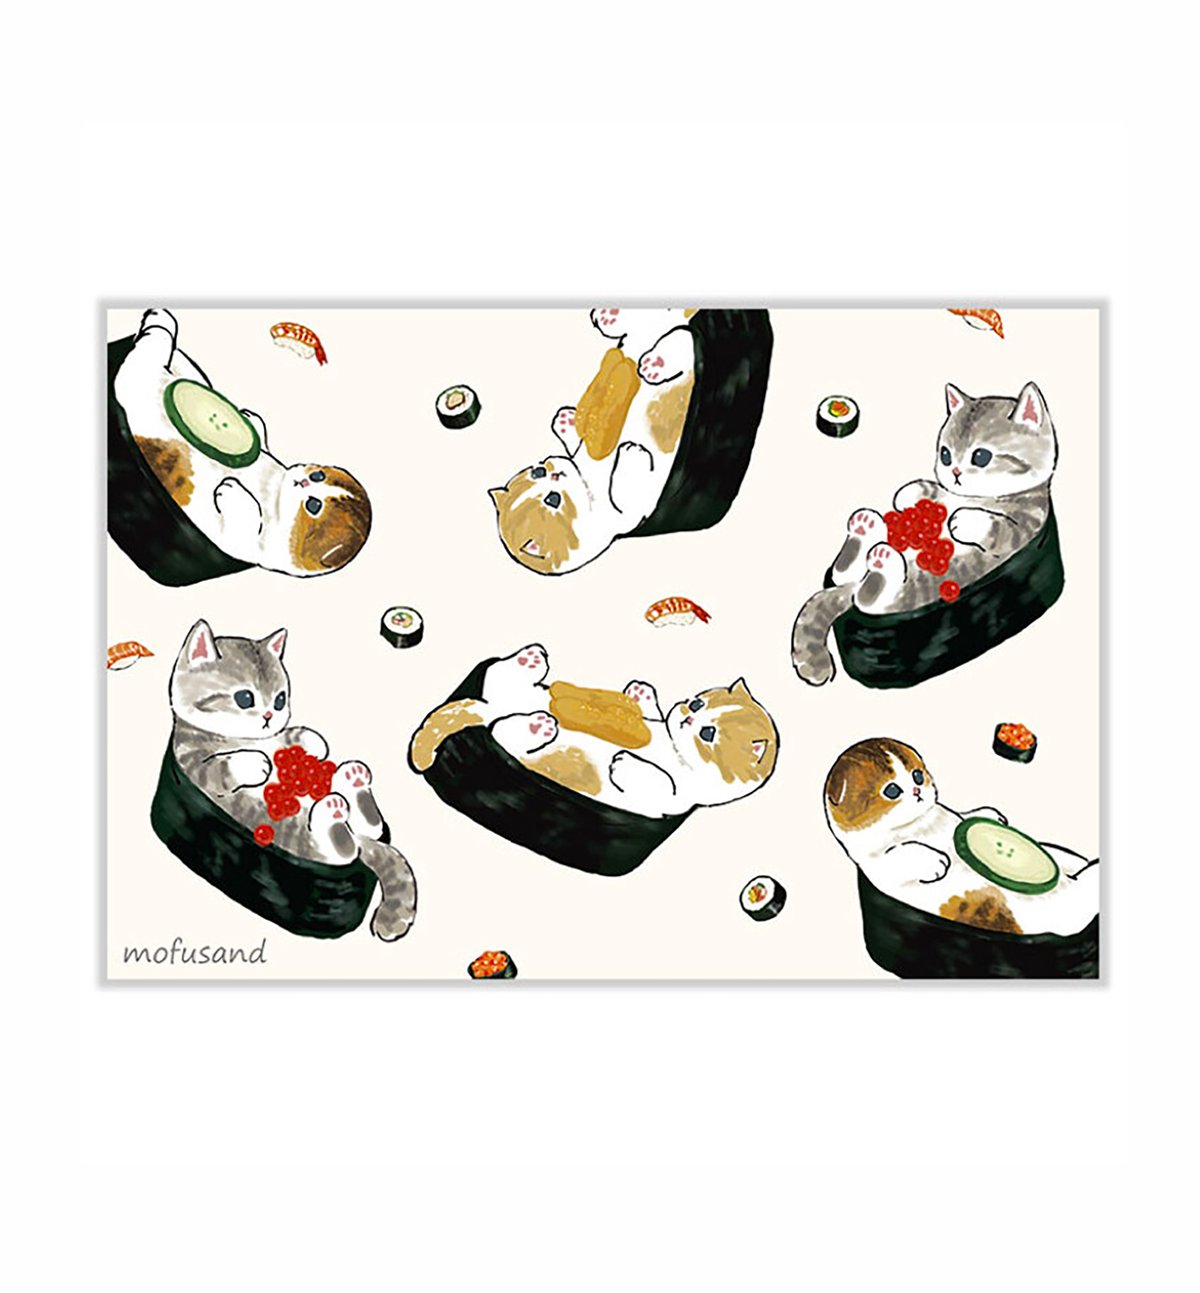 Mofusand Postcard [Sushi]